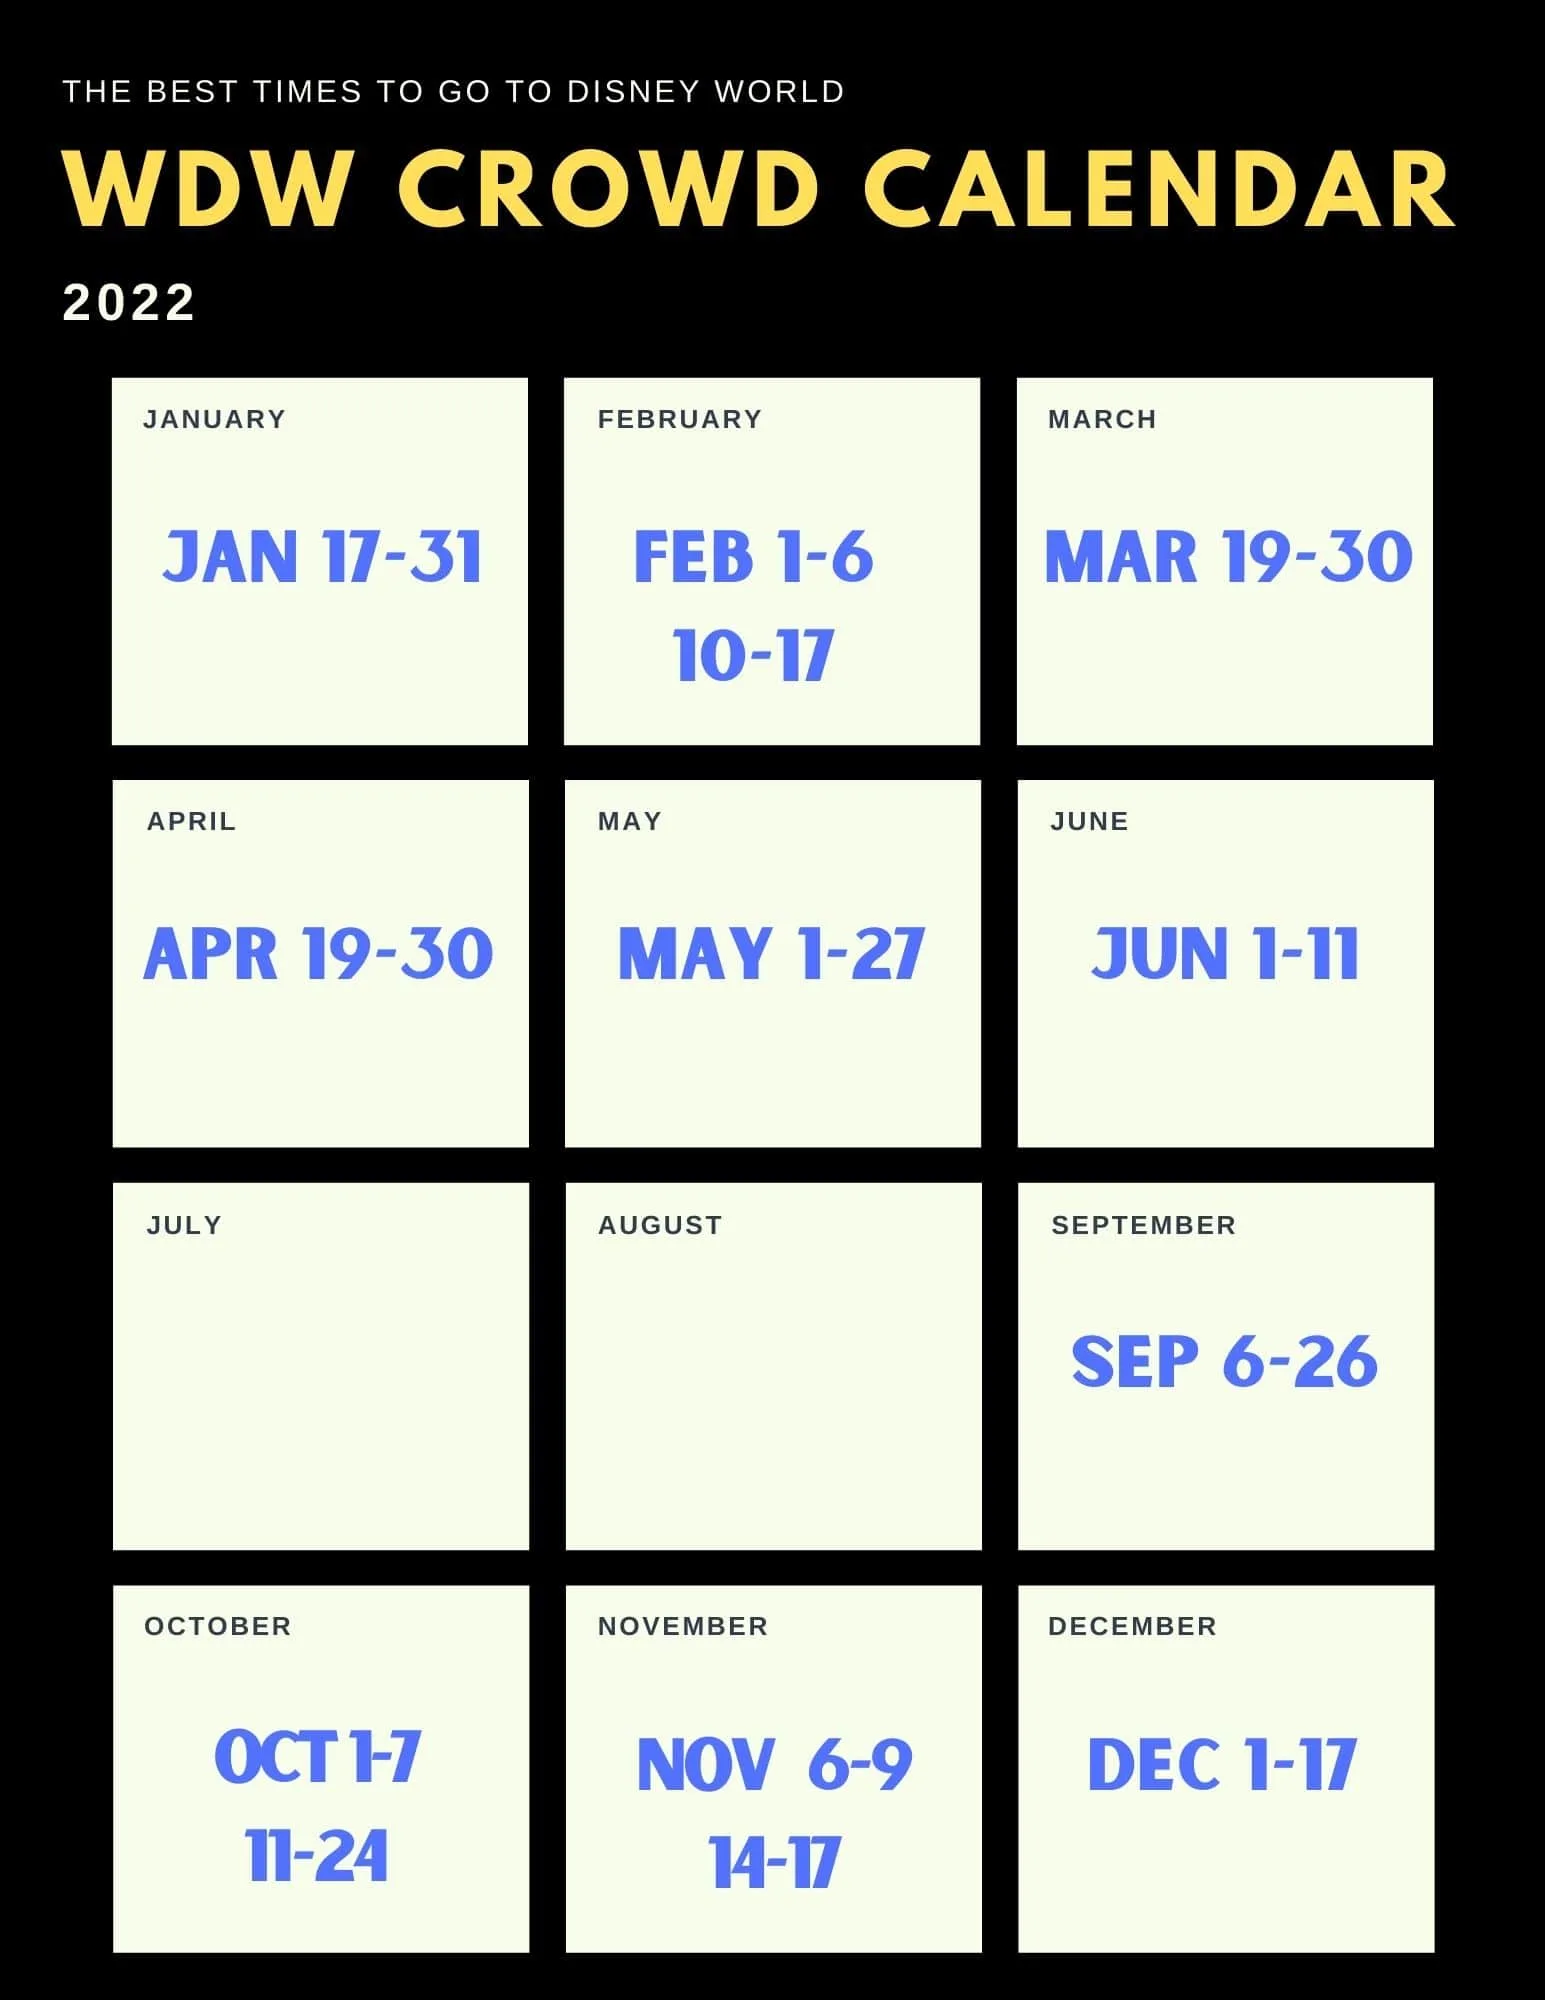 Disney Crowd Calendar May 2022 Disney World Crowd Calendar 2022 - Disney Insider Tips